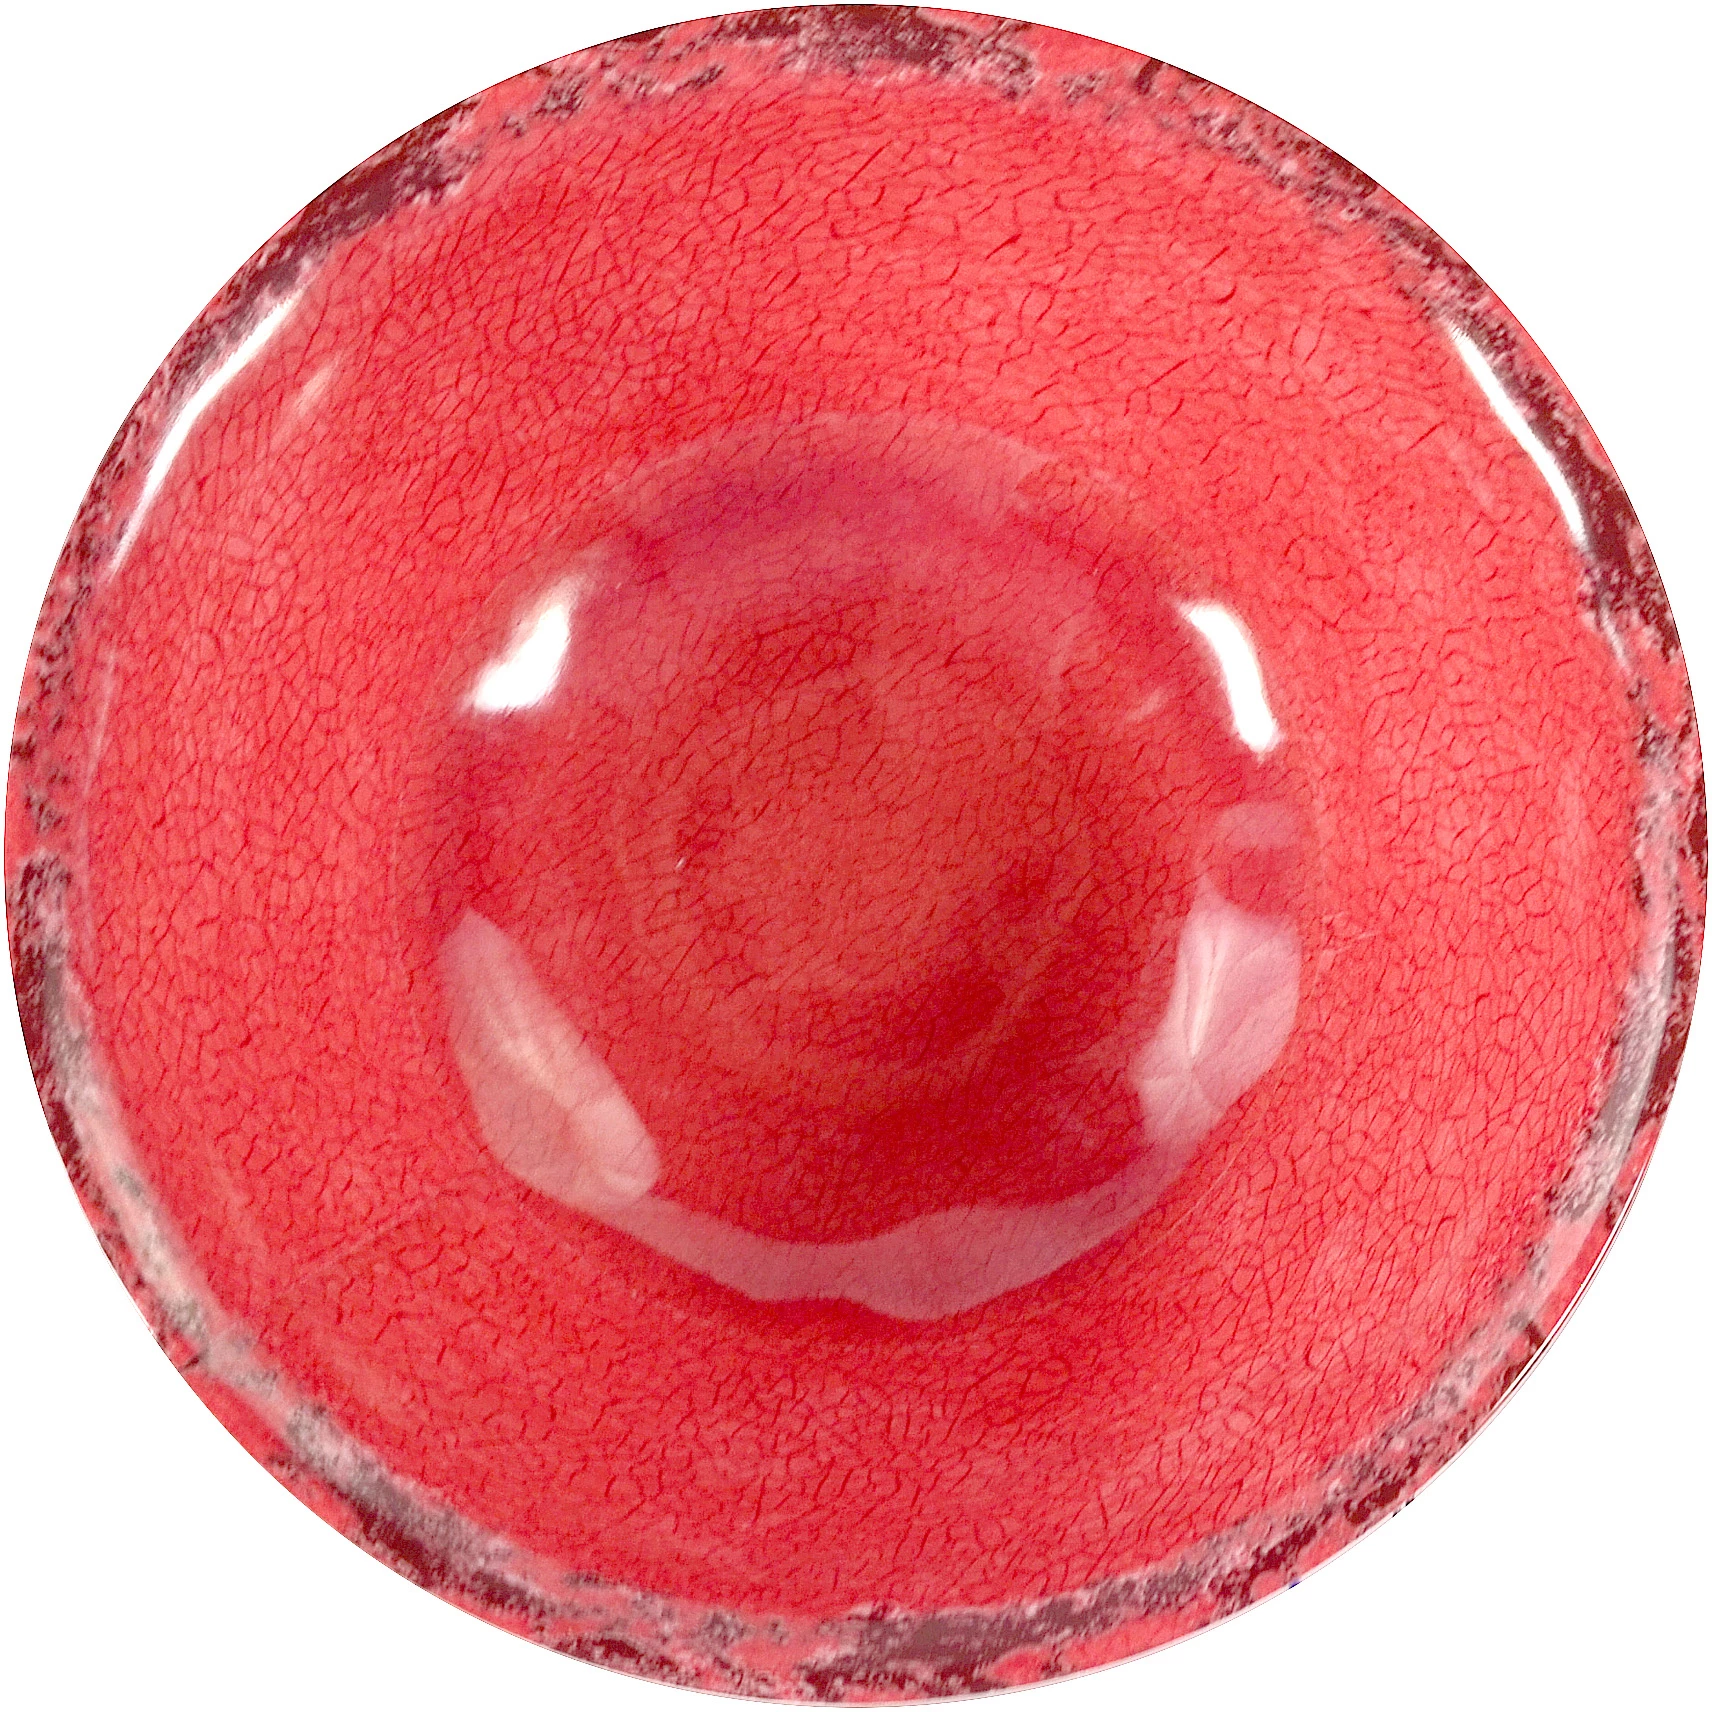 Dalebrook Casablanca skål, rød, 23 cl, ø13 cm